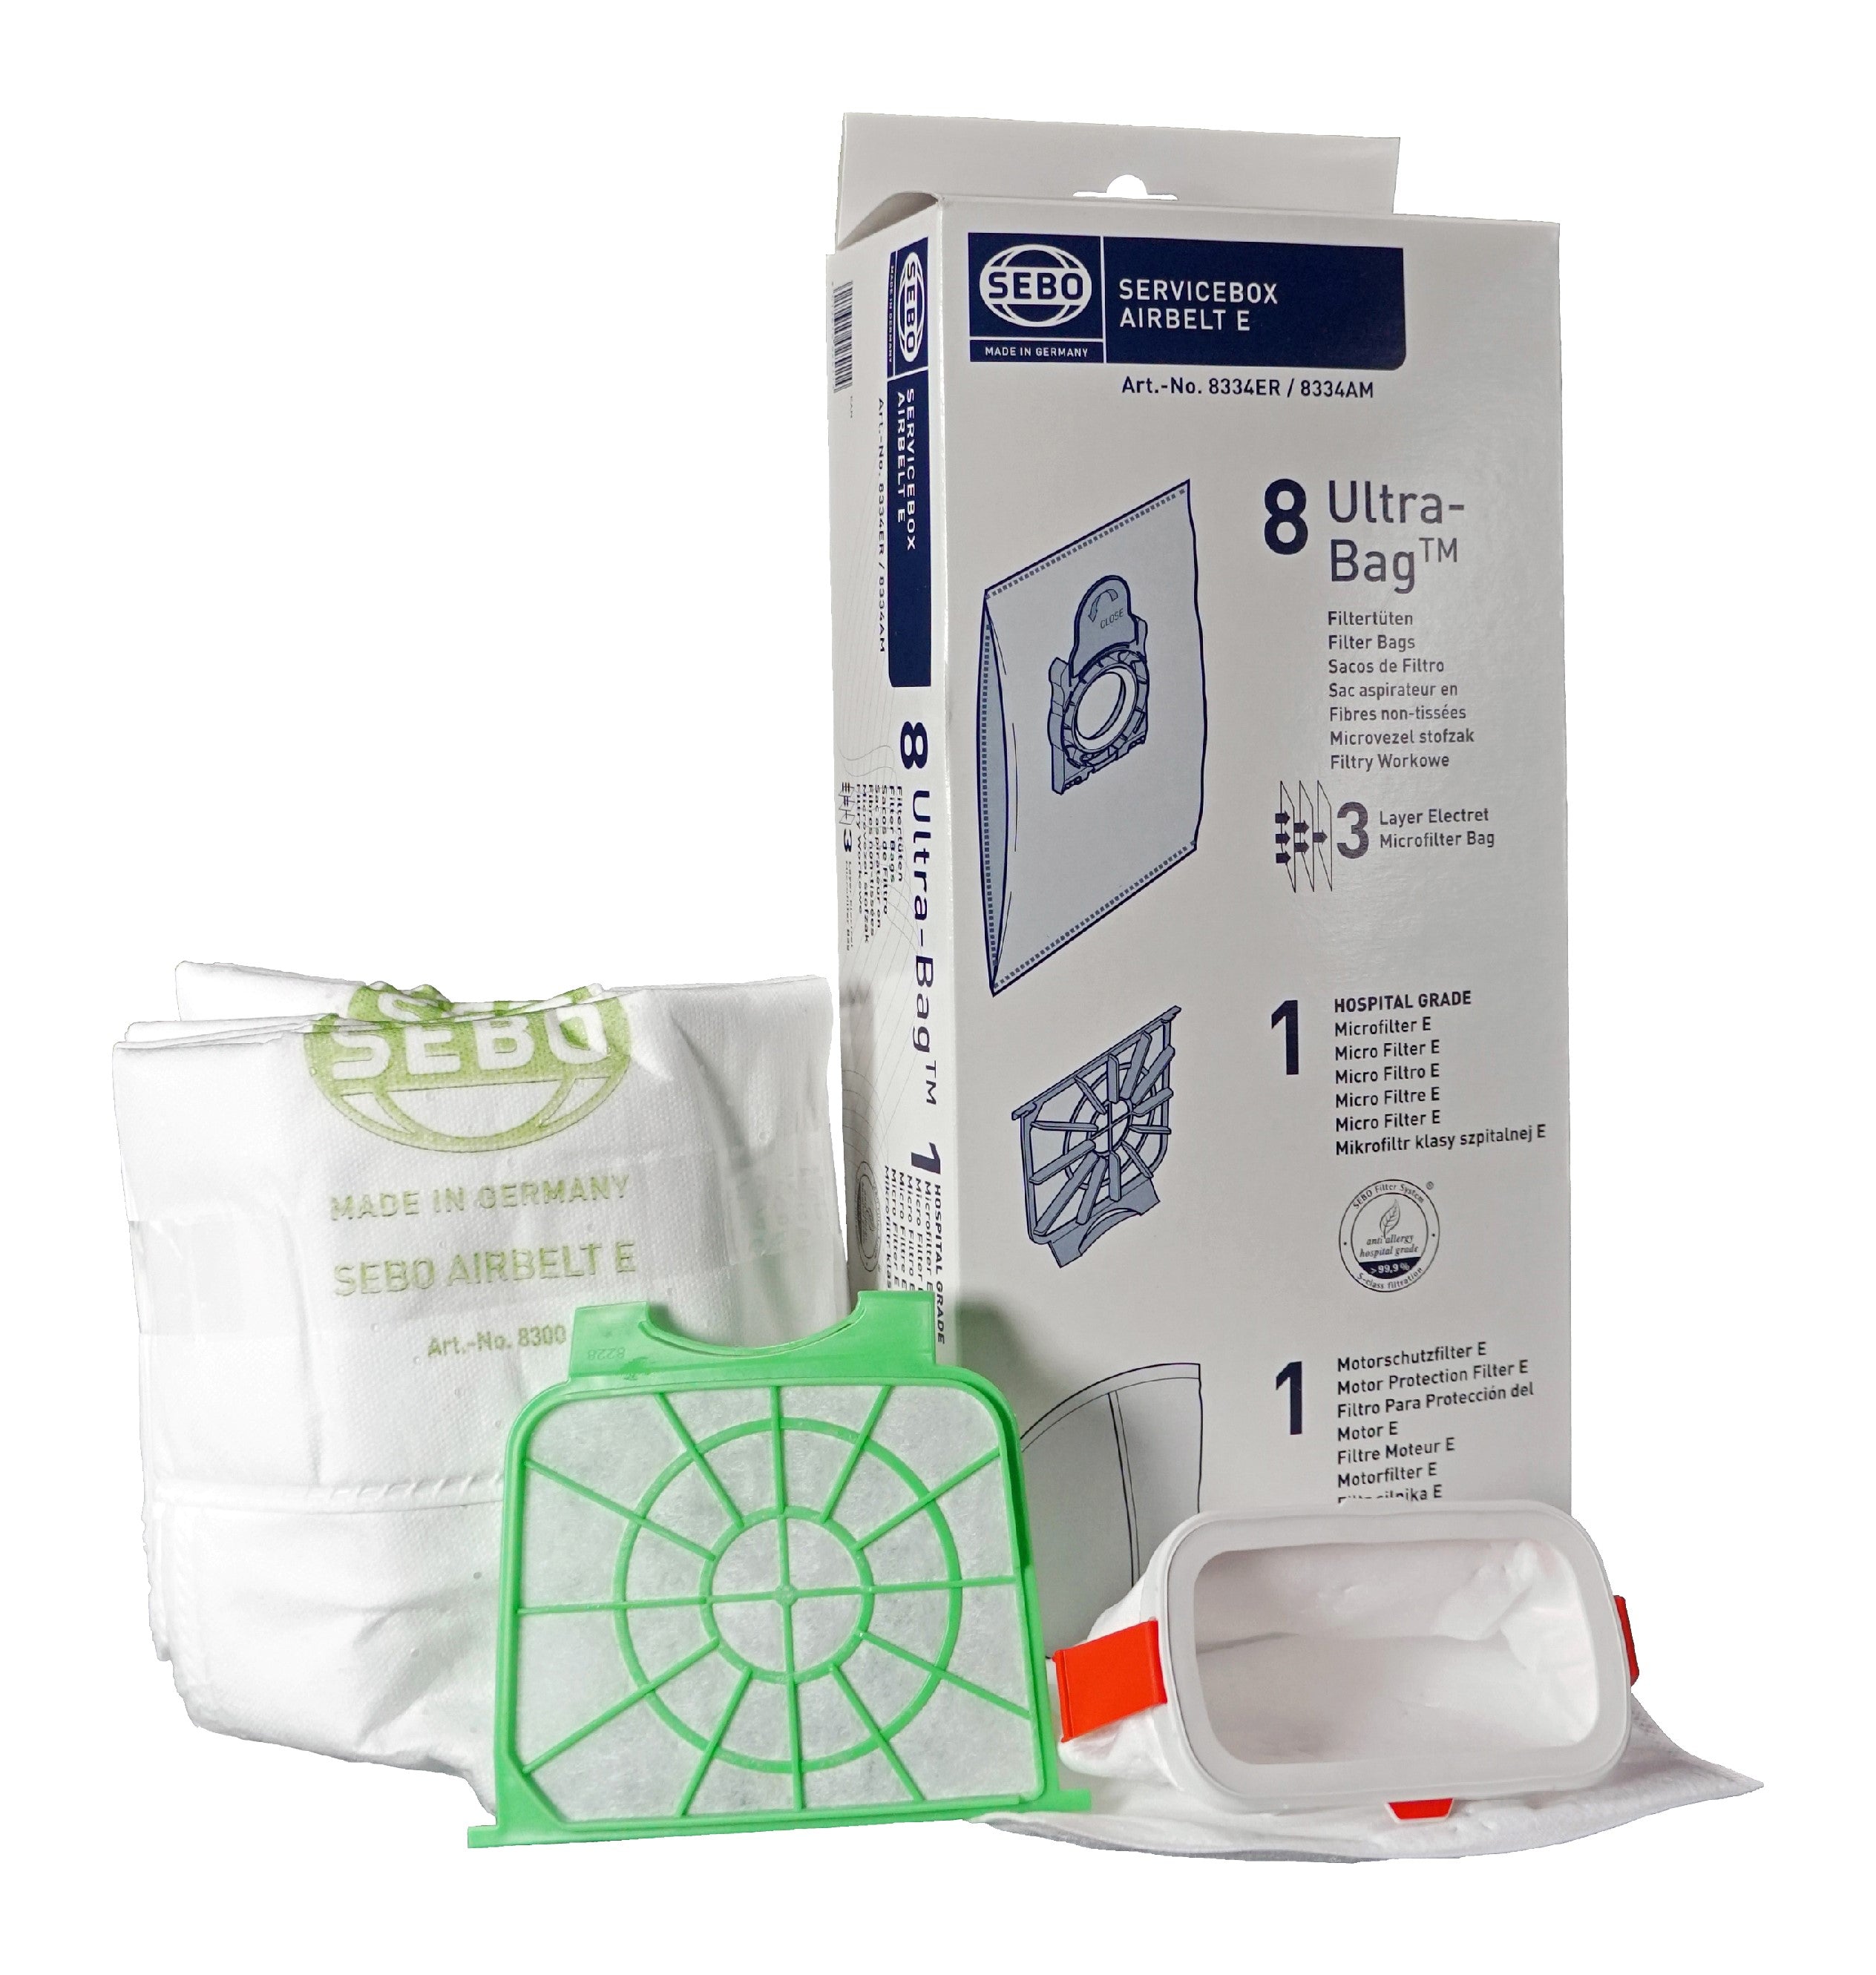 SEBO Service Box E (1 Piece), 8 bags, Microfilter, and Exhaust Filter